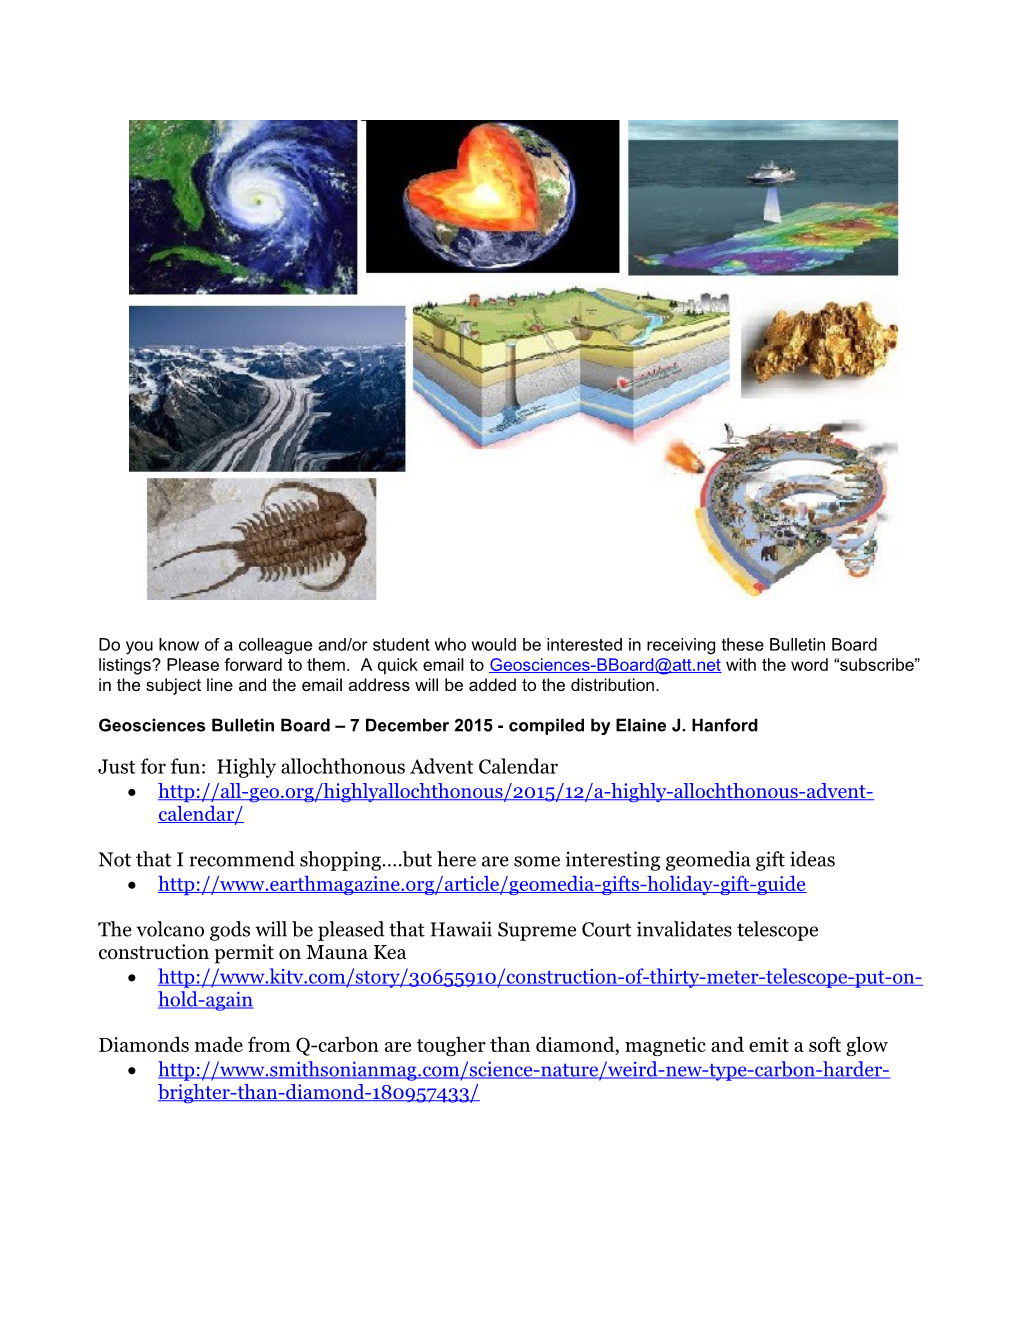 Geosciences Bulletin Board 7 December 2015- Compiled by Elaine J. Hanford